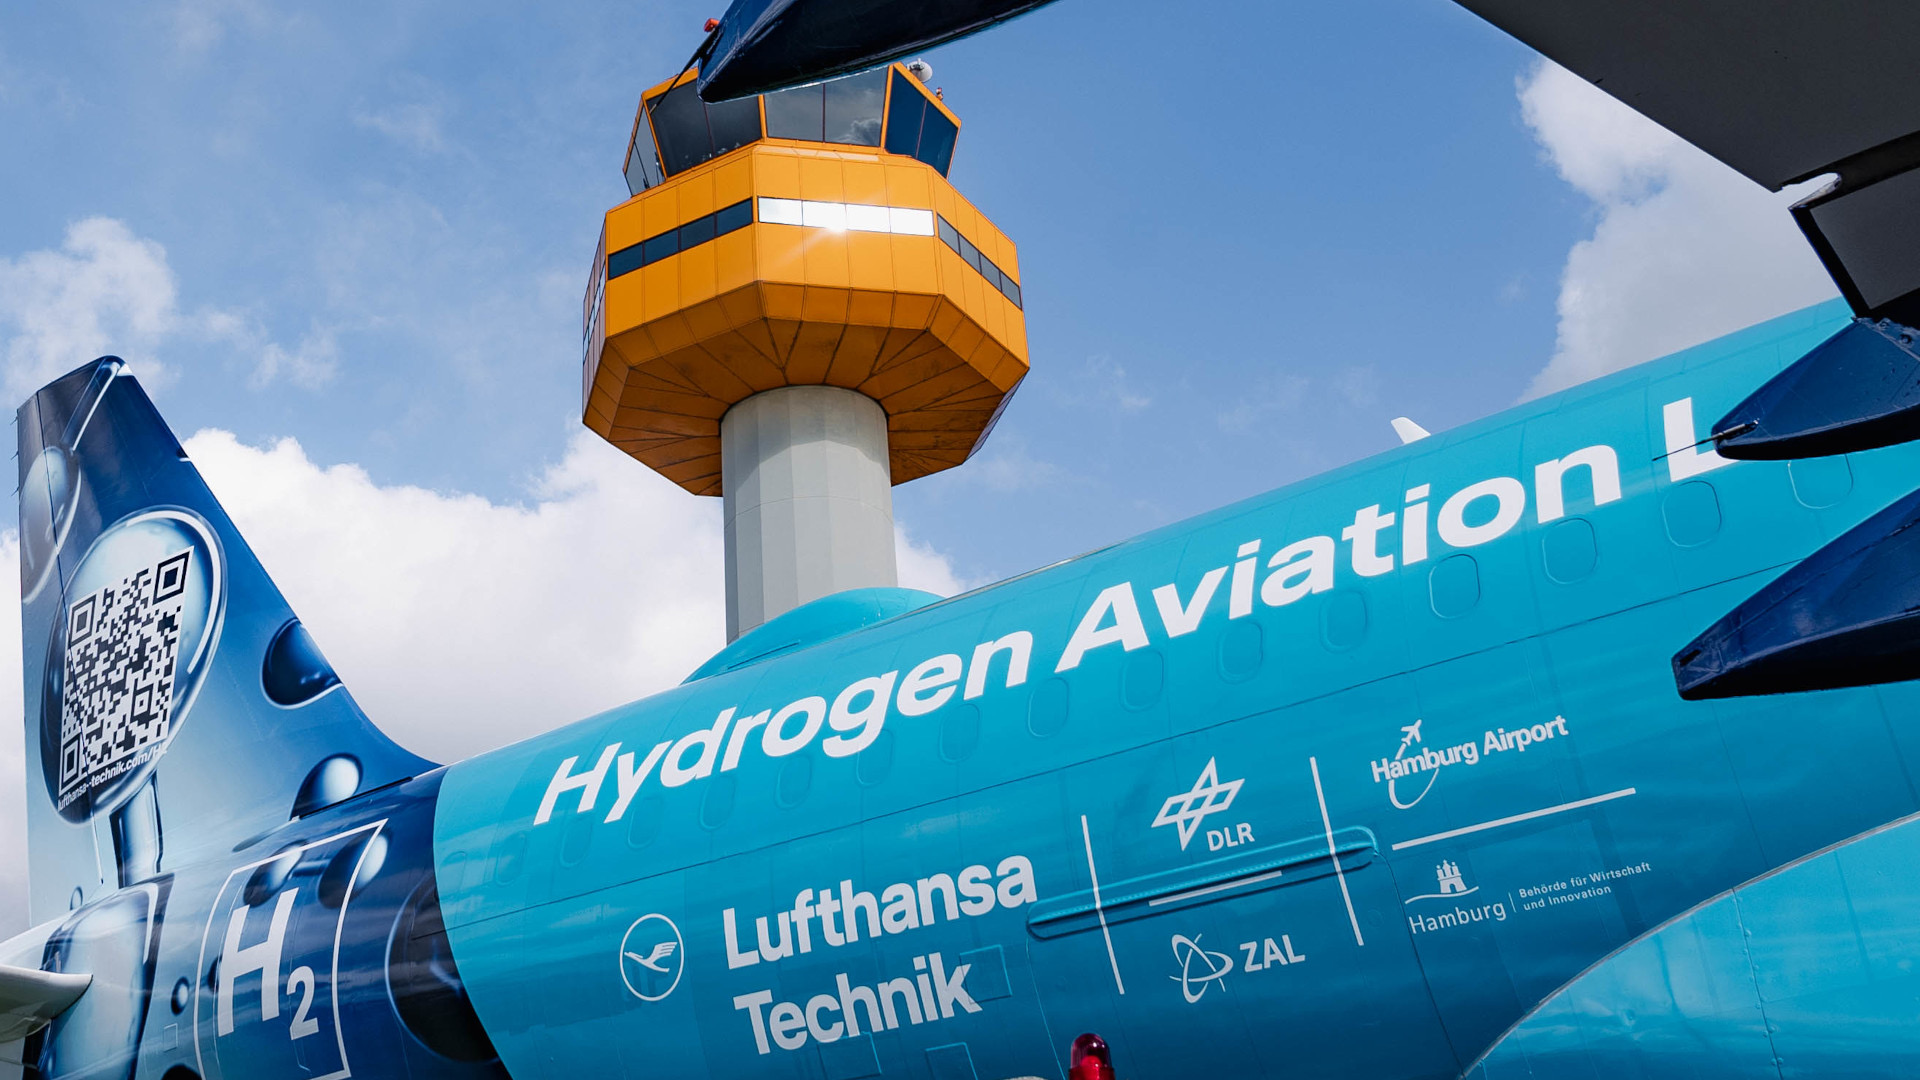 Lufthansa Technik transforms old A320 into field lab for hydrogen tech